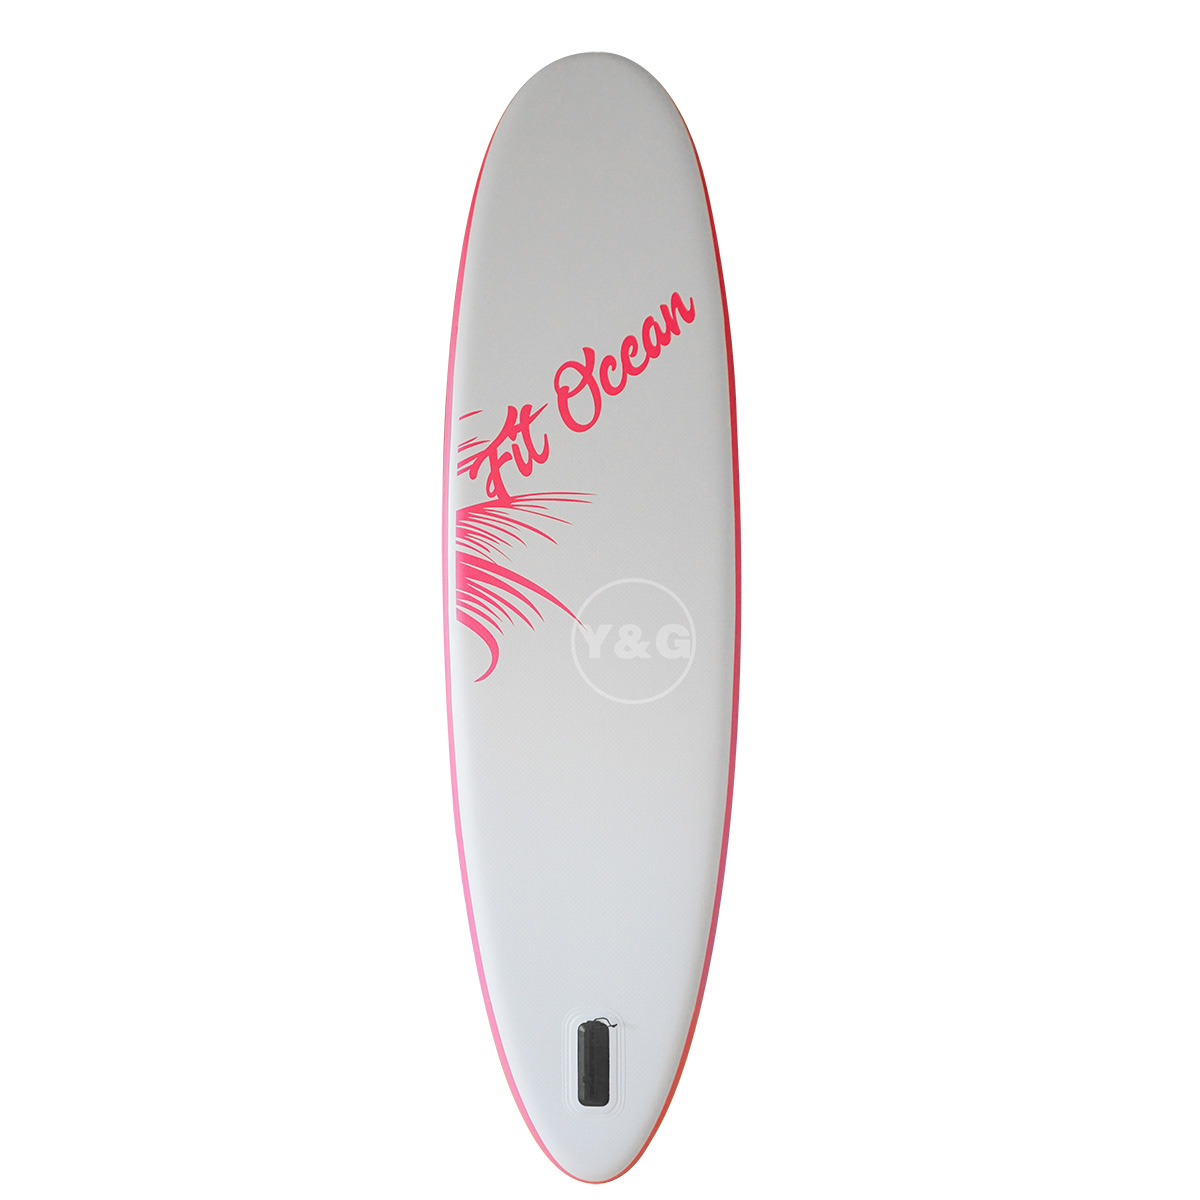 Tabla Paddle Surf Hinchable Hojas RosasYPD-75